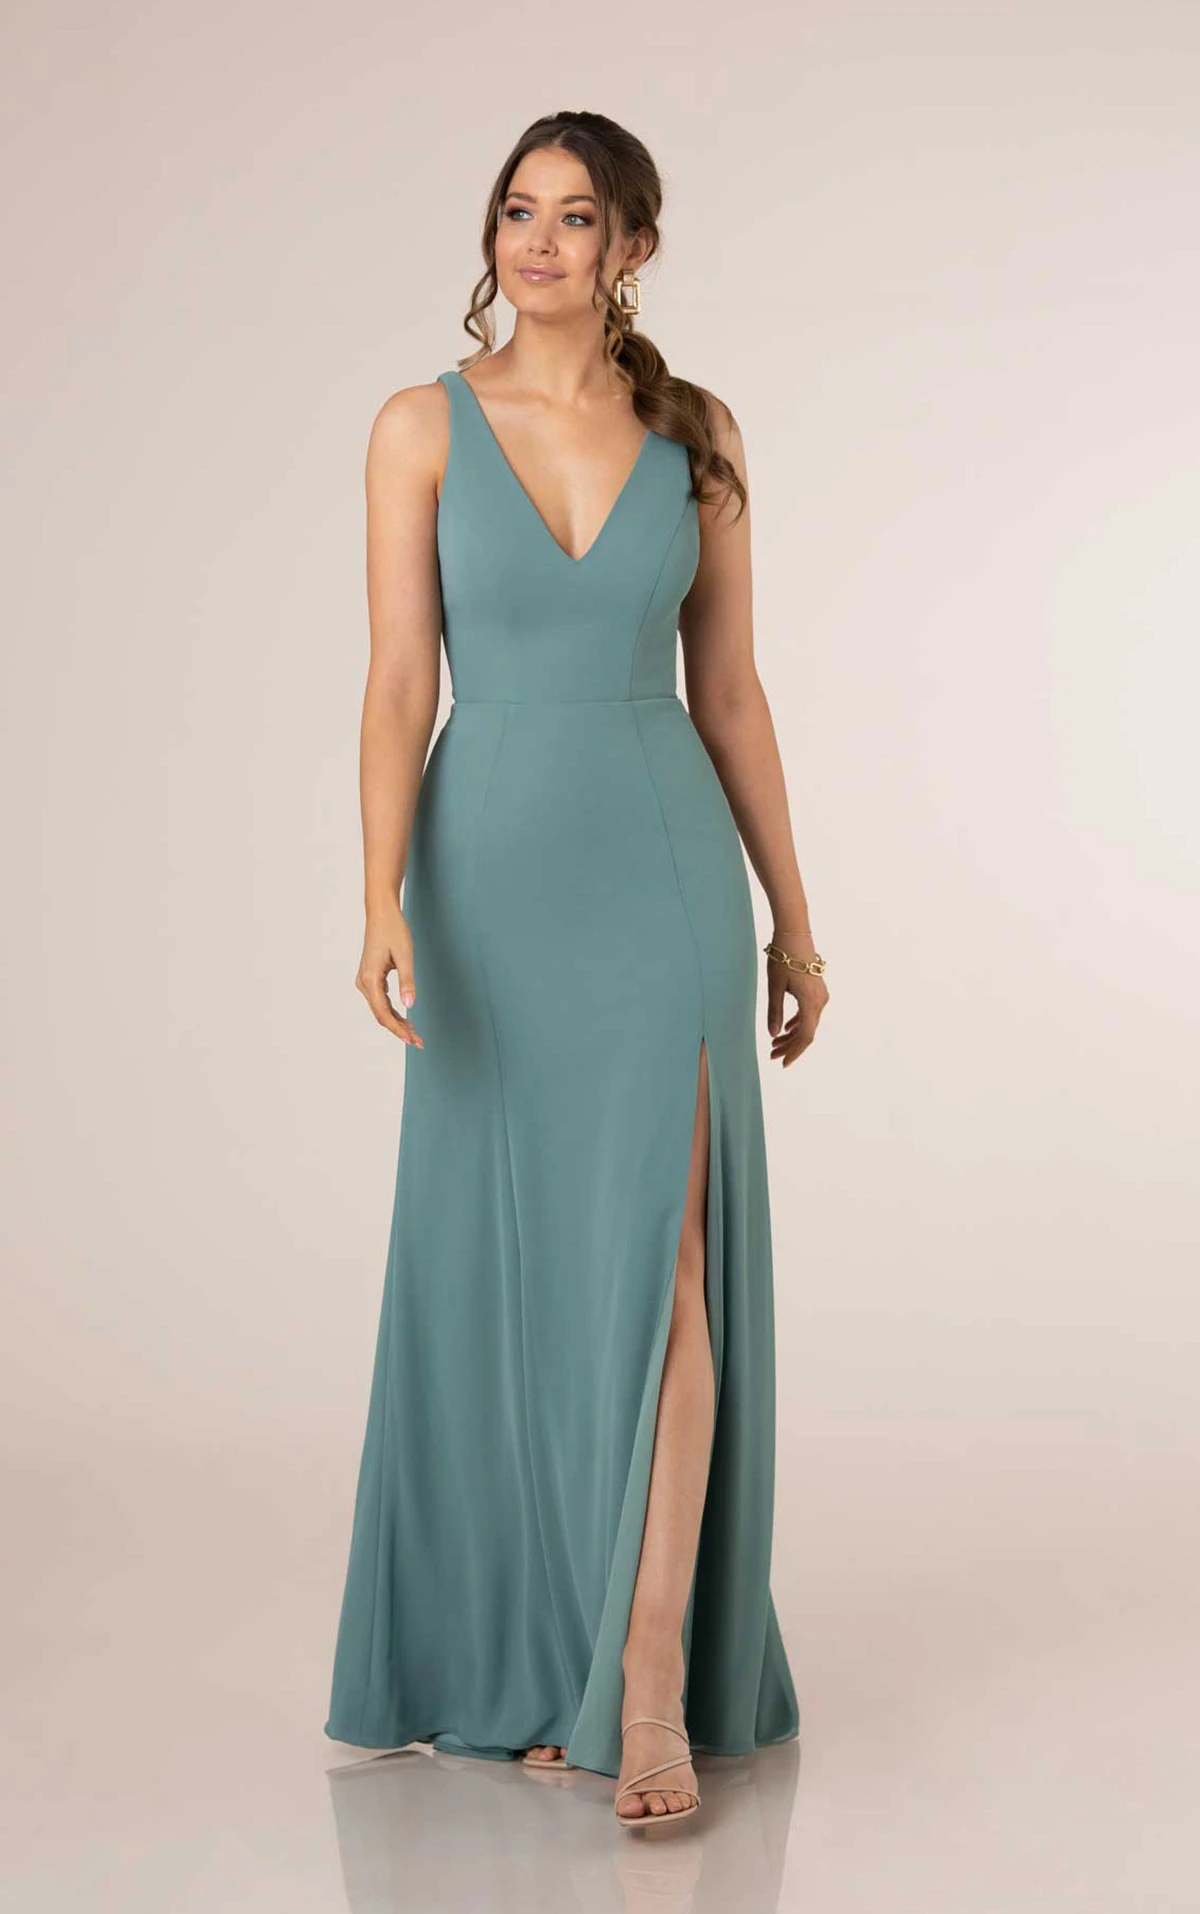 teal floor length bridesmaid dress with slit - 9756 by Sorella Vita